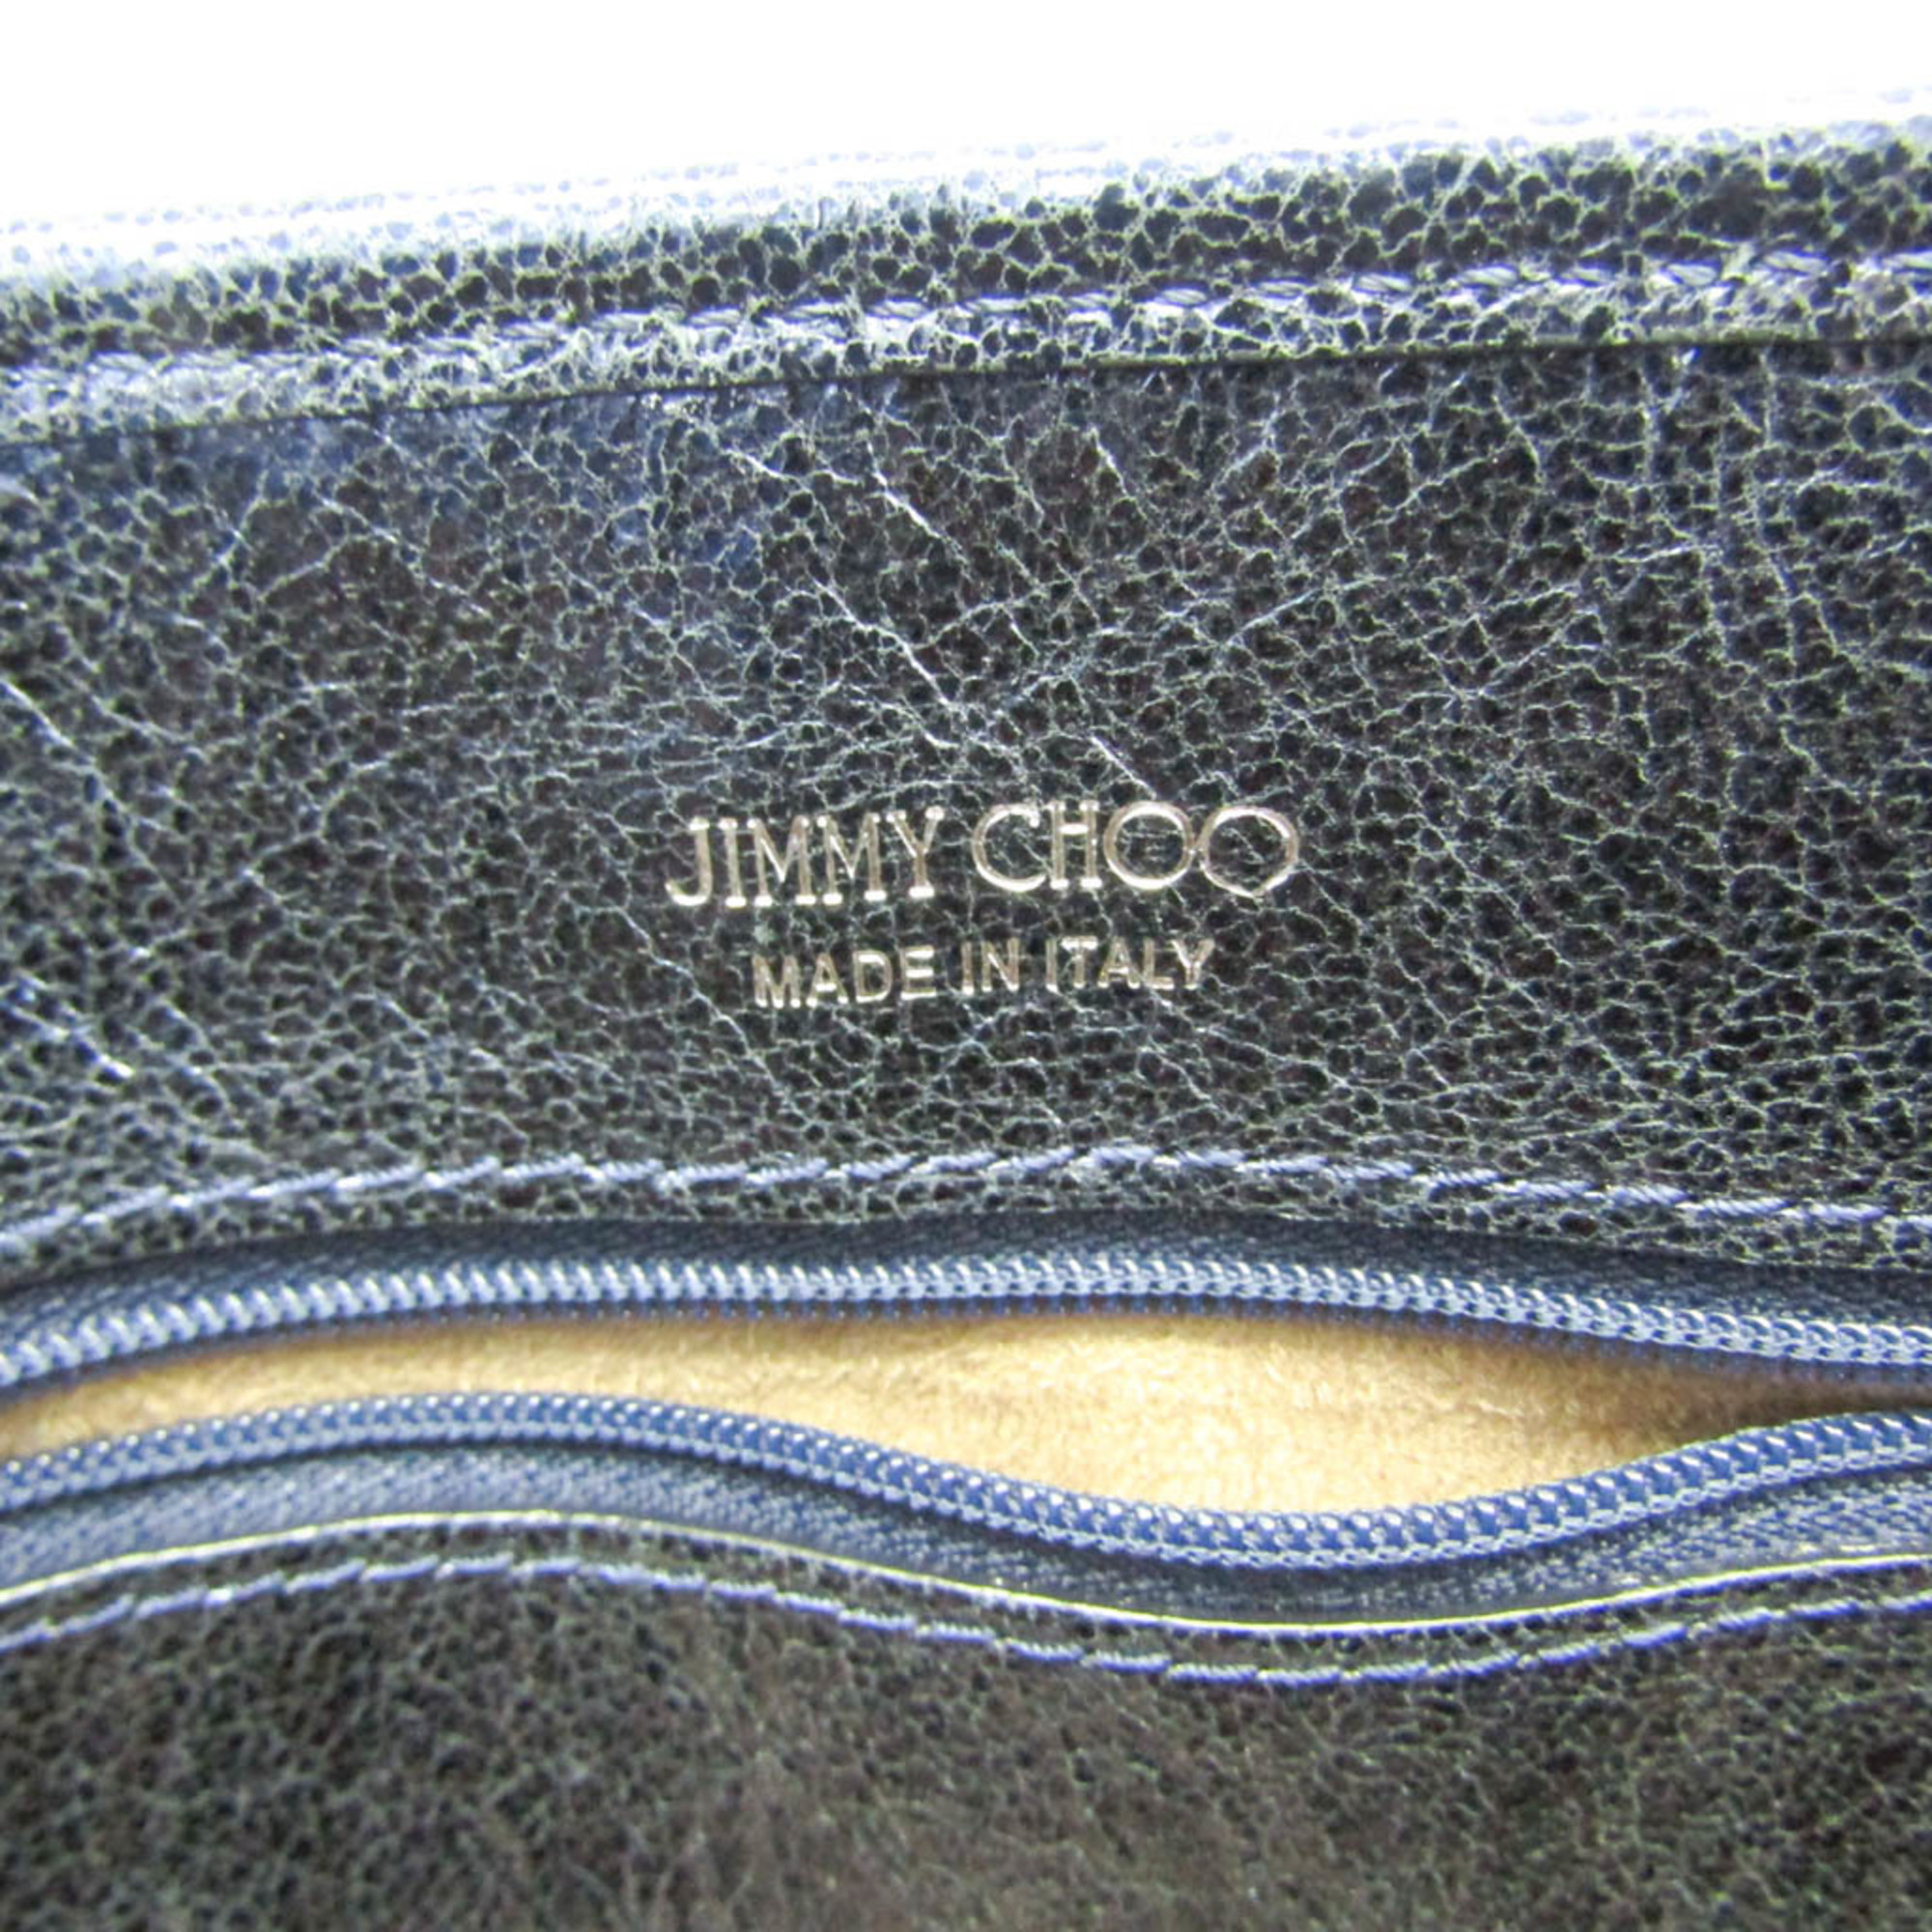 Jimmy Choo Sasha M. Women's Leather Studded Tote Bag Metallic Navy